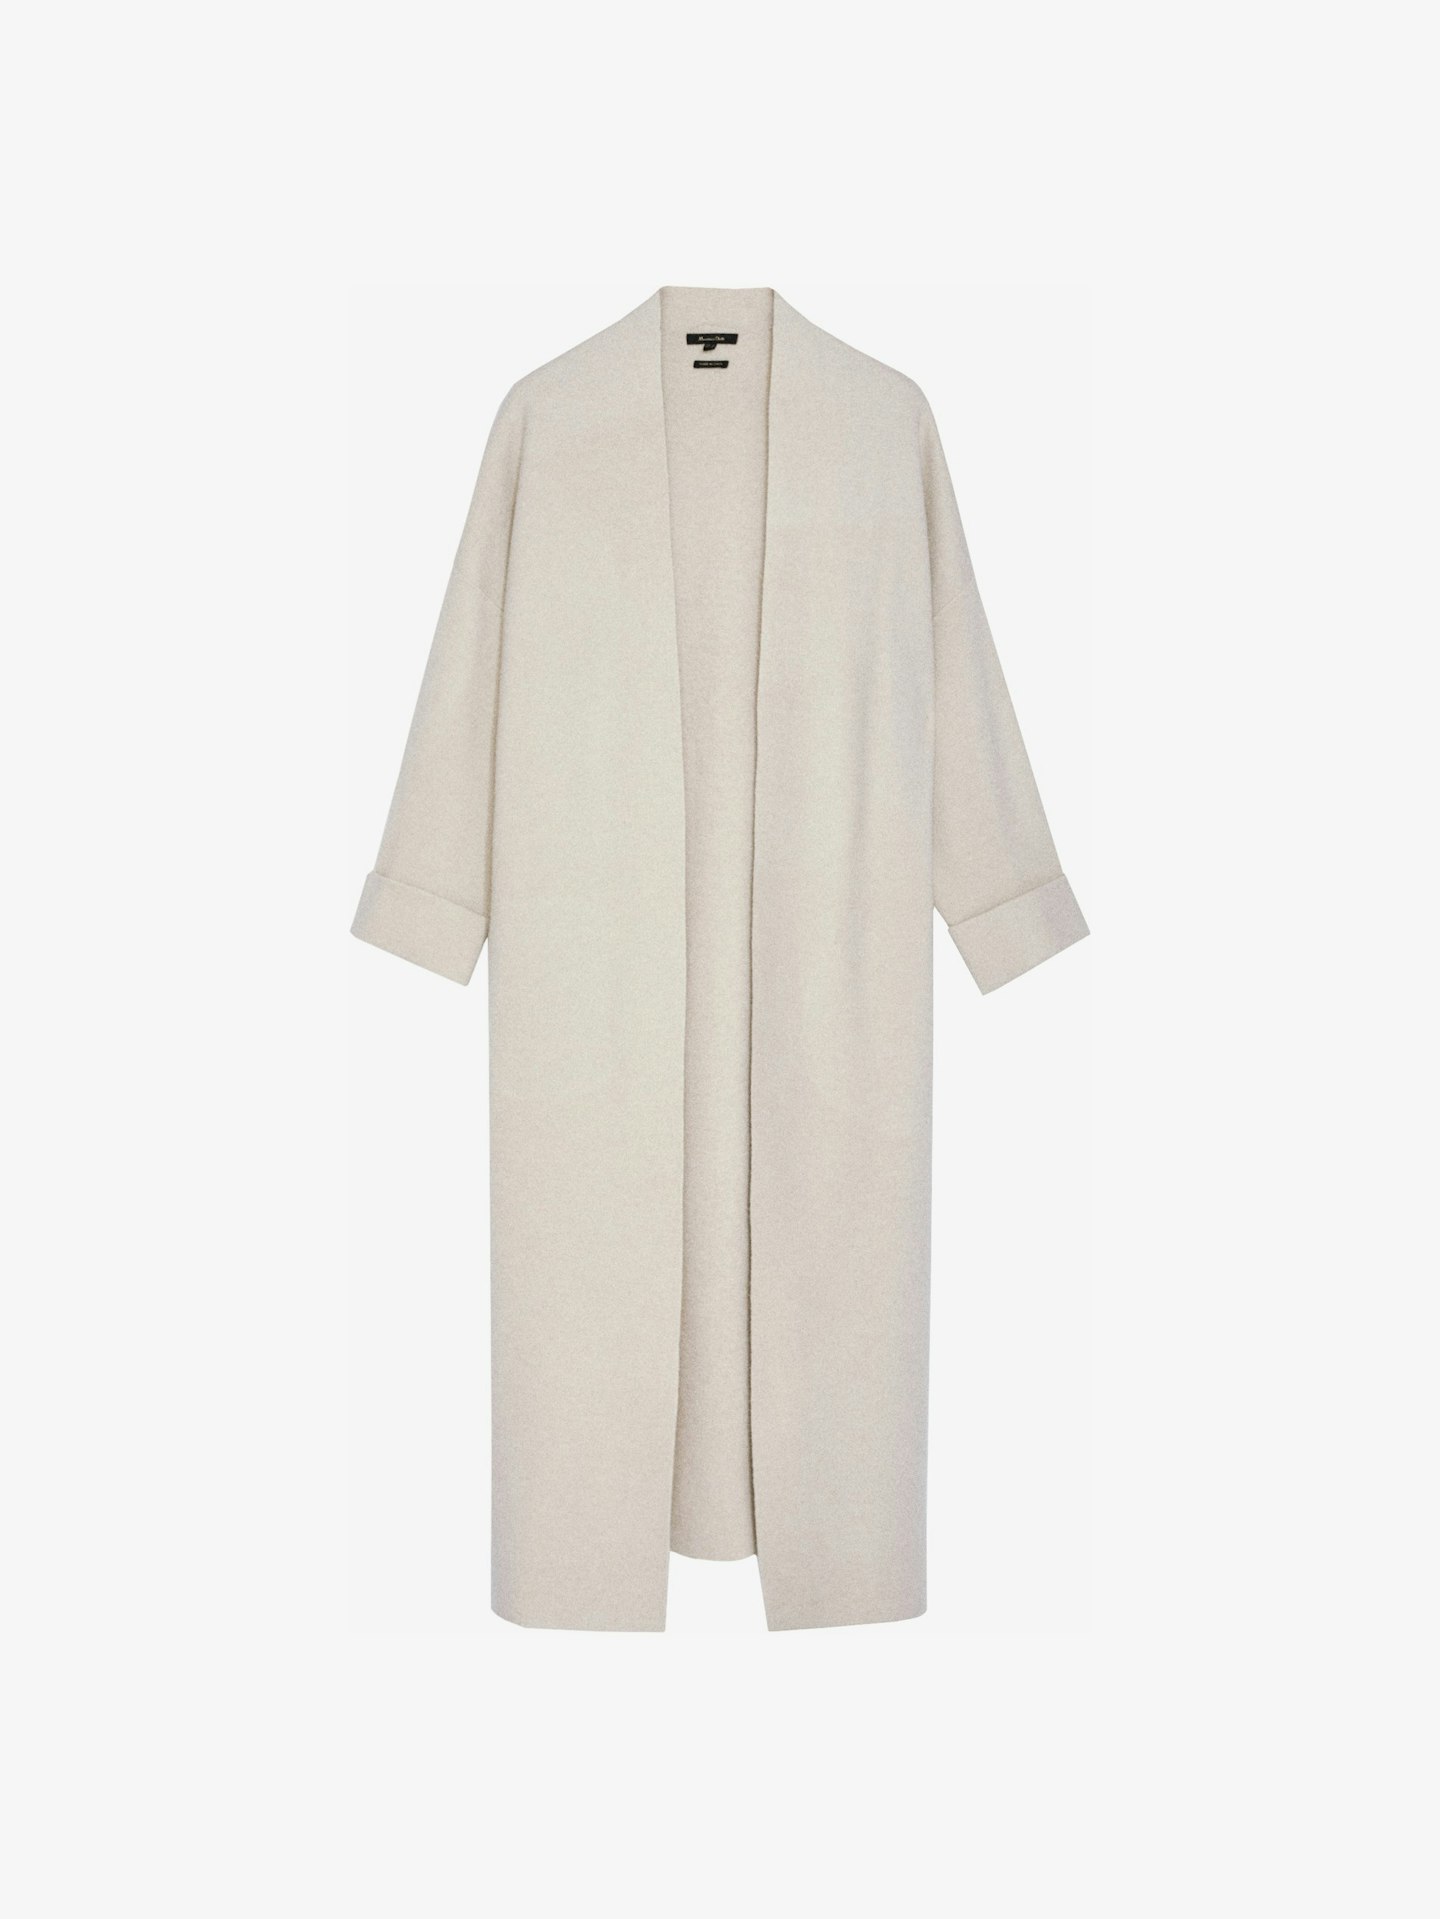 Massimo Dutti, Long Knit Coat, £89.95